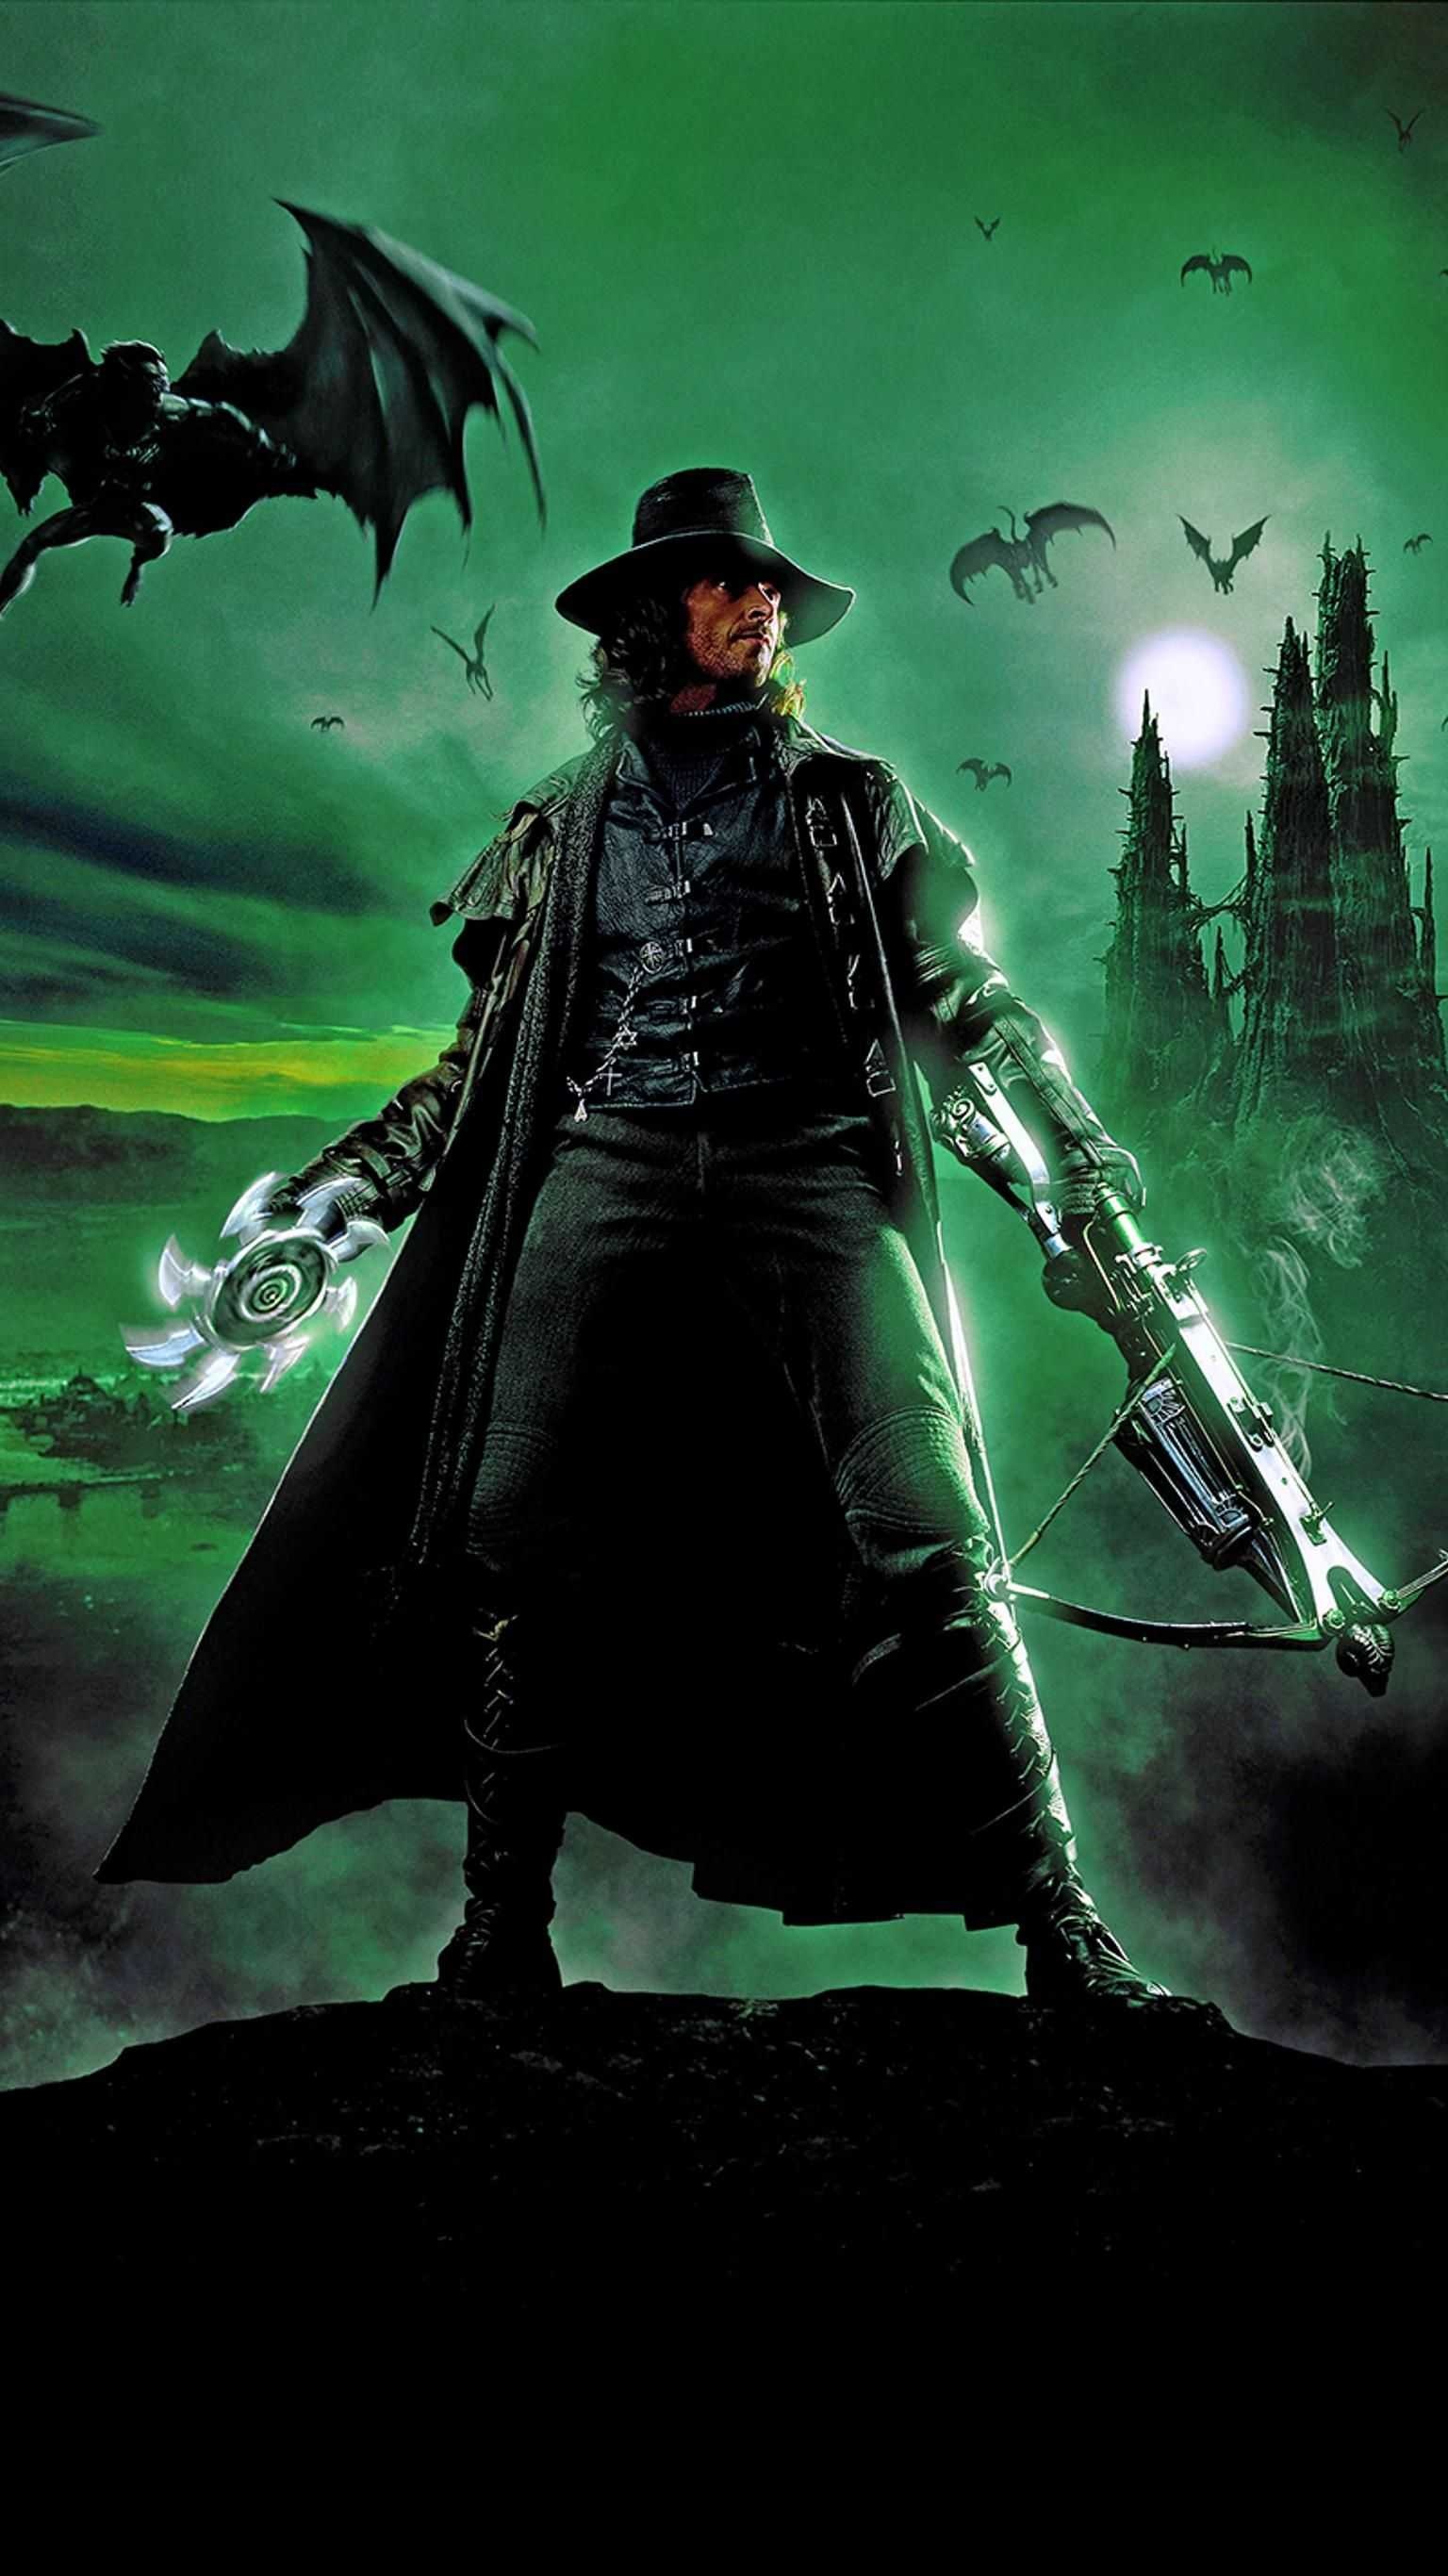 Van Helsing: The eponymous character was inspired by the vampire hunter from Bram Stoker's novel Dracula. 1540x2740 HD Wallpaper.